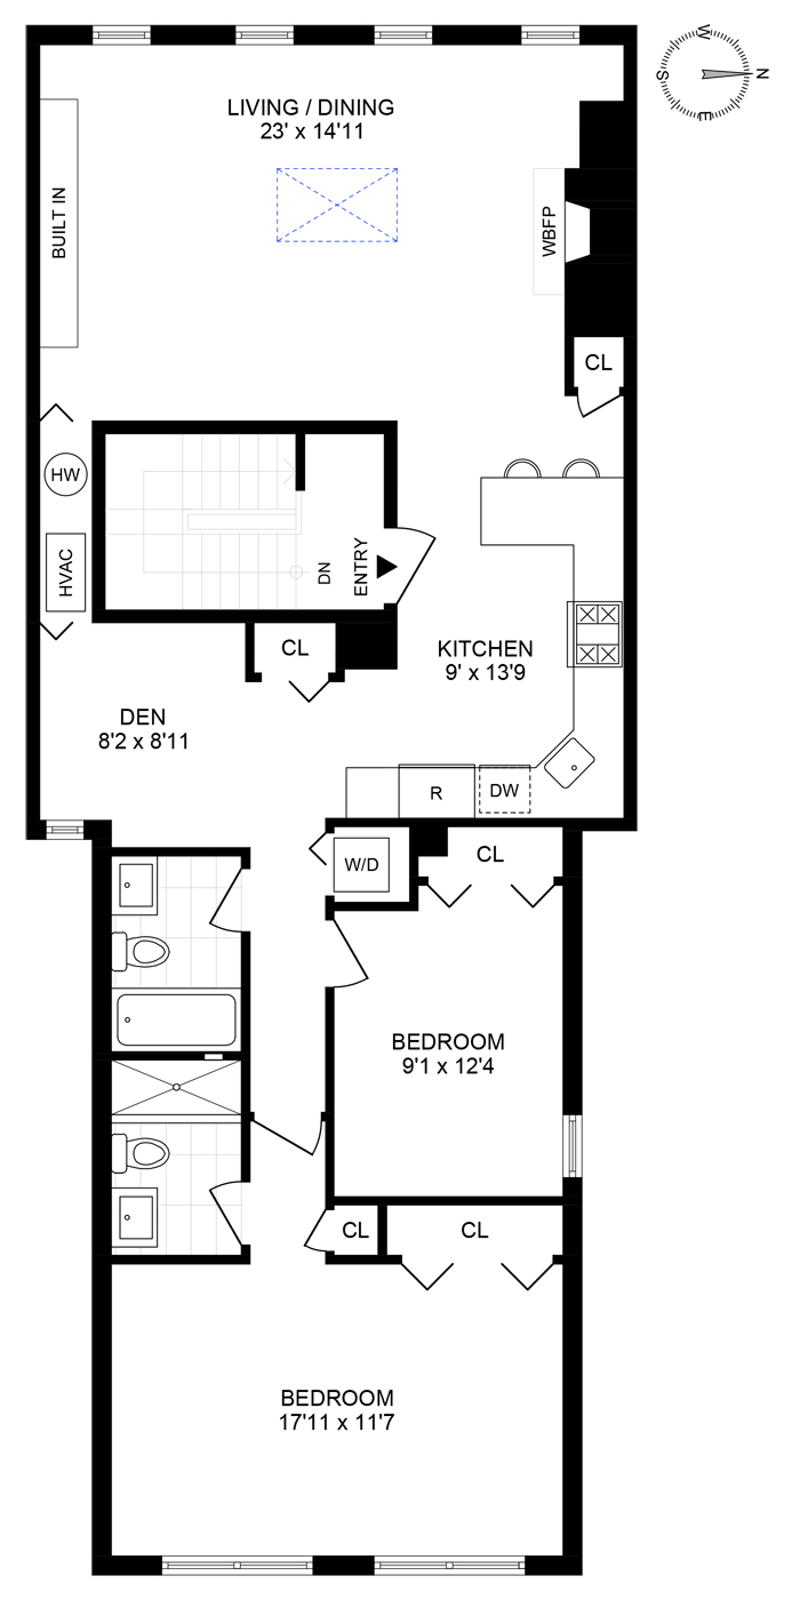 Floorplan for 713 Adams St, 4